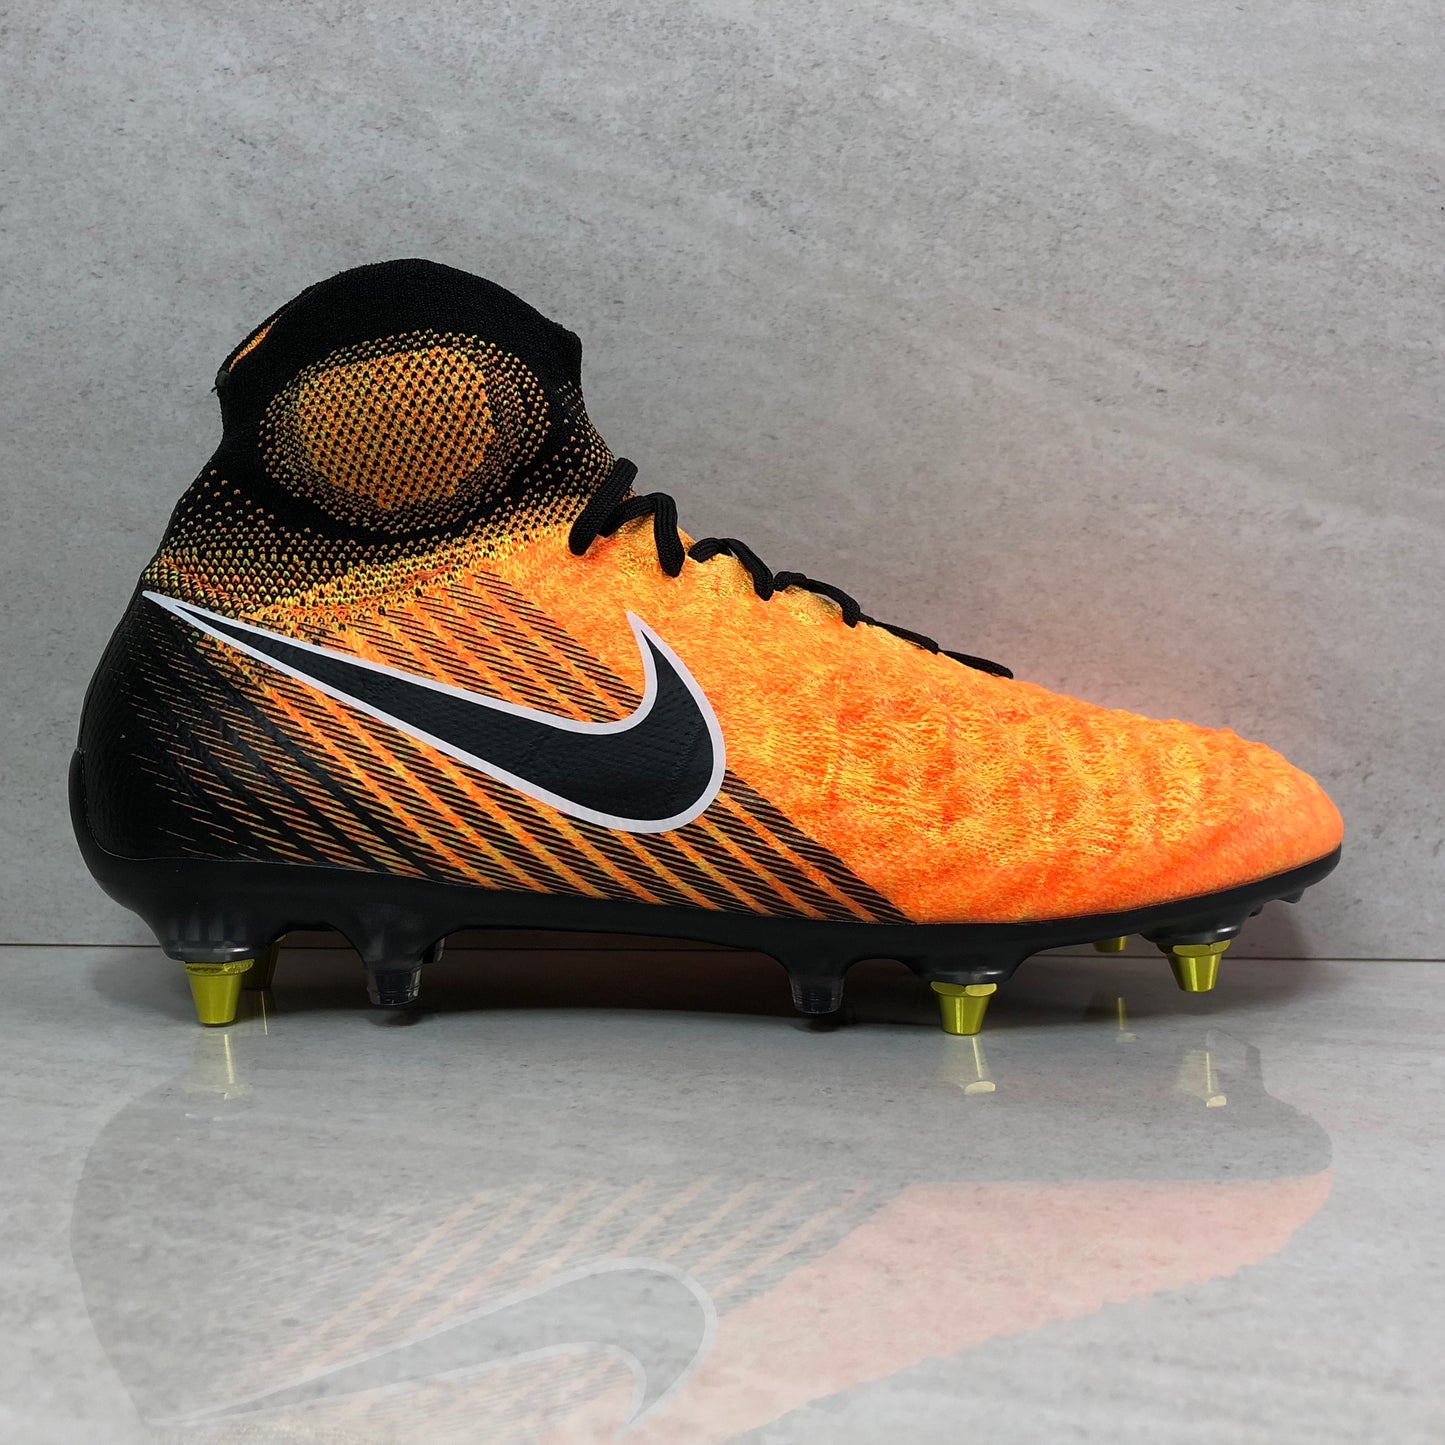 Nike Magista Obra II SG Pro - 869482 802 - Chaussures de football pour homme Taille 8/Taille 9 Laser Orange Noir Blanc